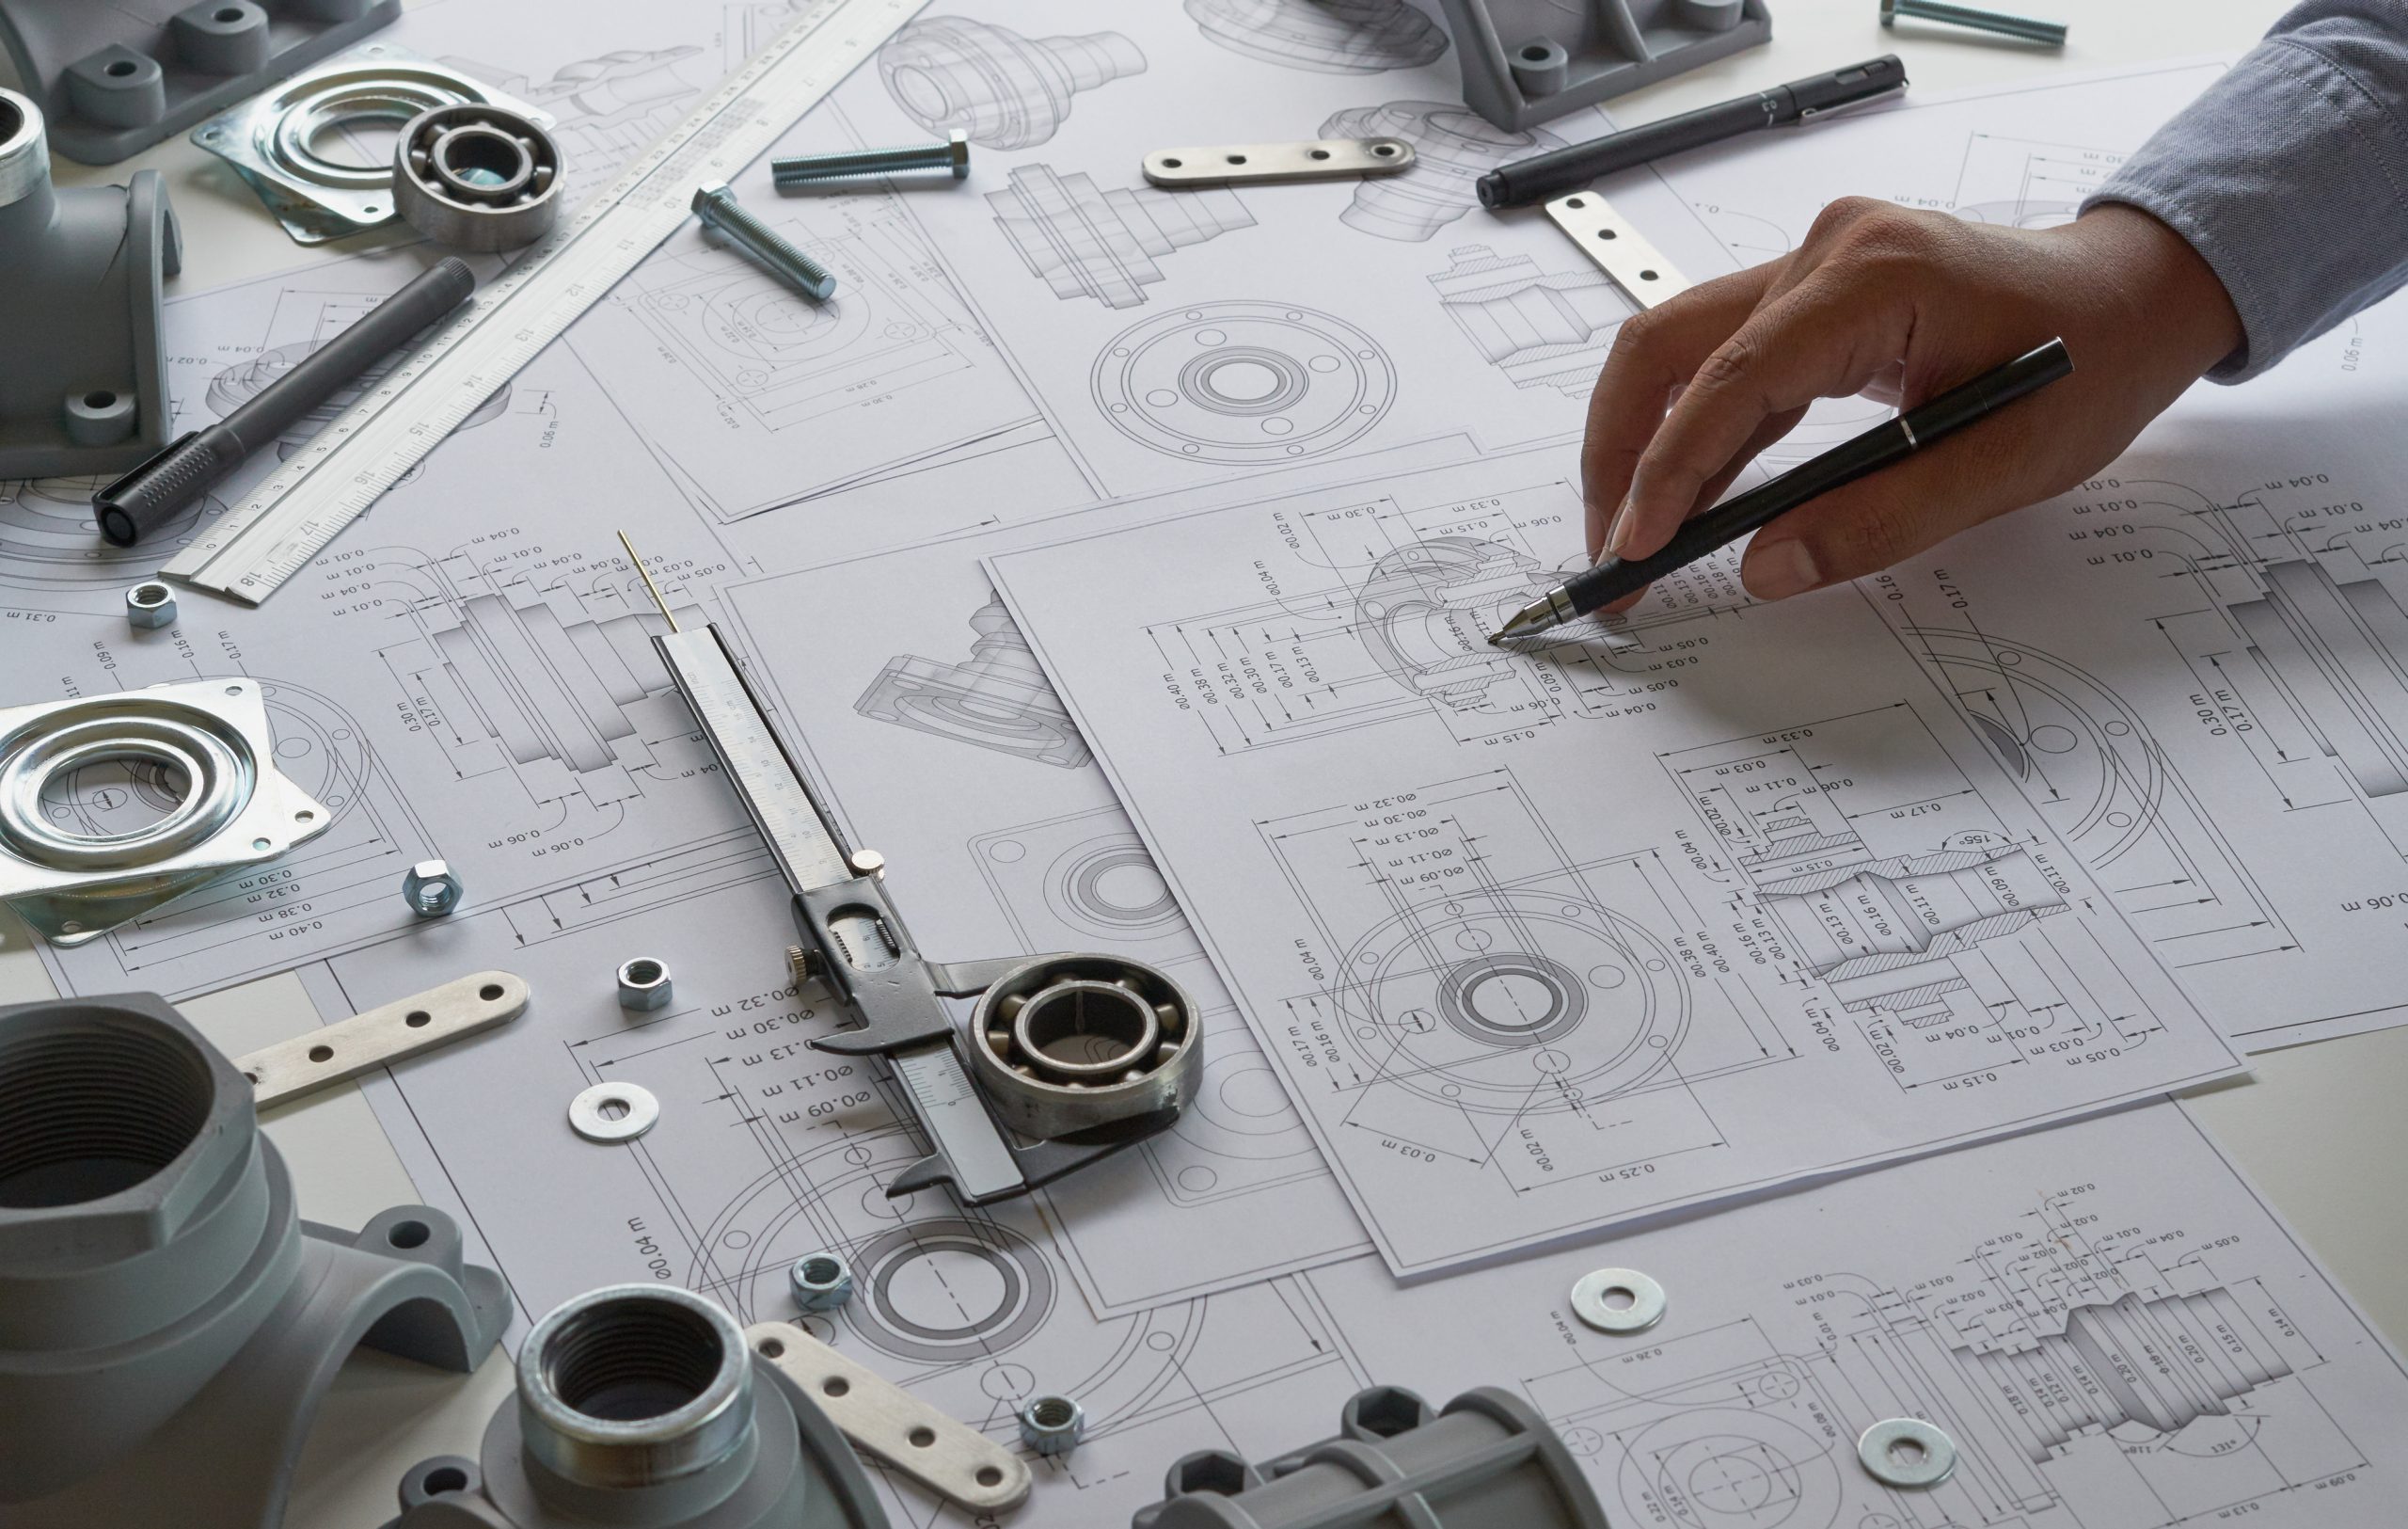 Engineer technician designing drawings mechanicalÂ parts engineering Enginemanufacturing factory Industry Industrial work project blueprints measuring bearings caliper tools